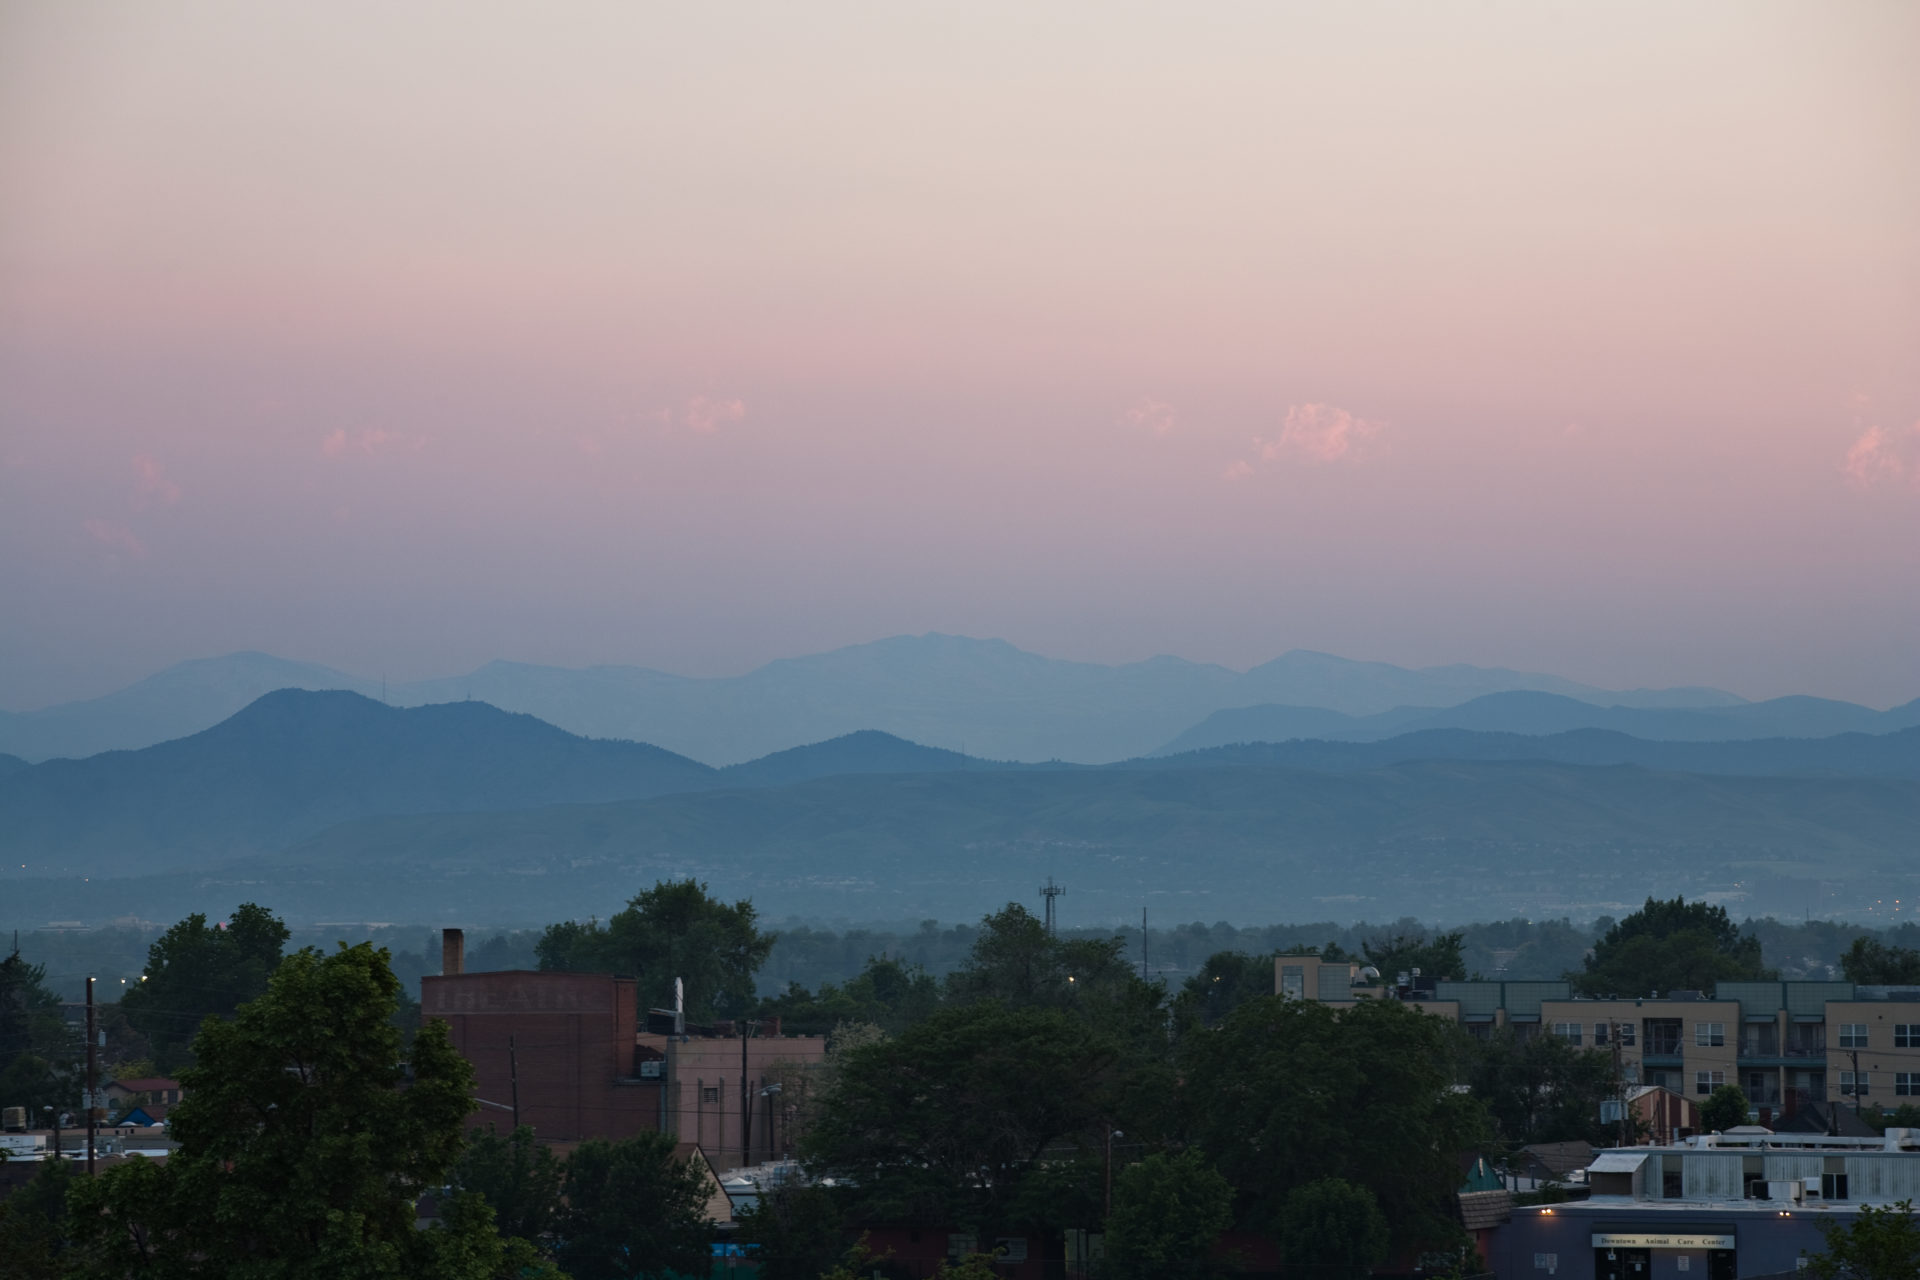 Mount Evans sunset - June 6, 2011